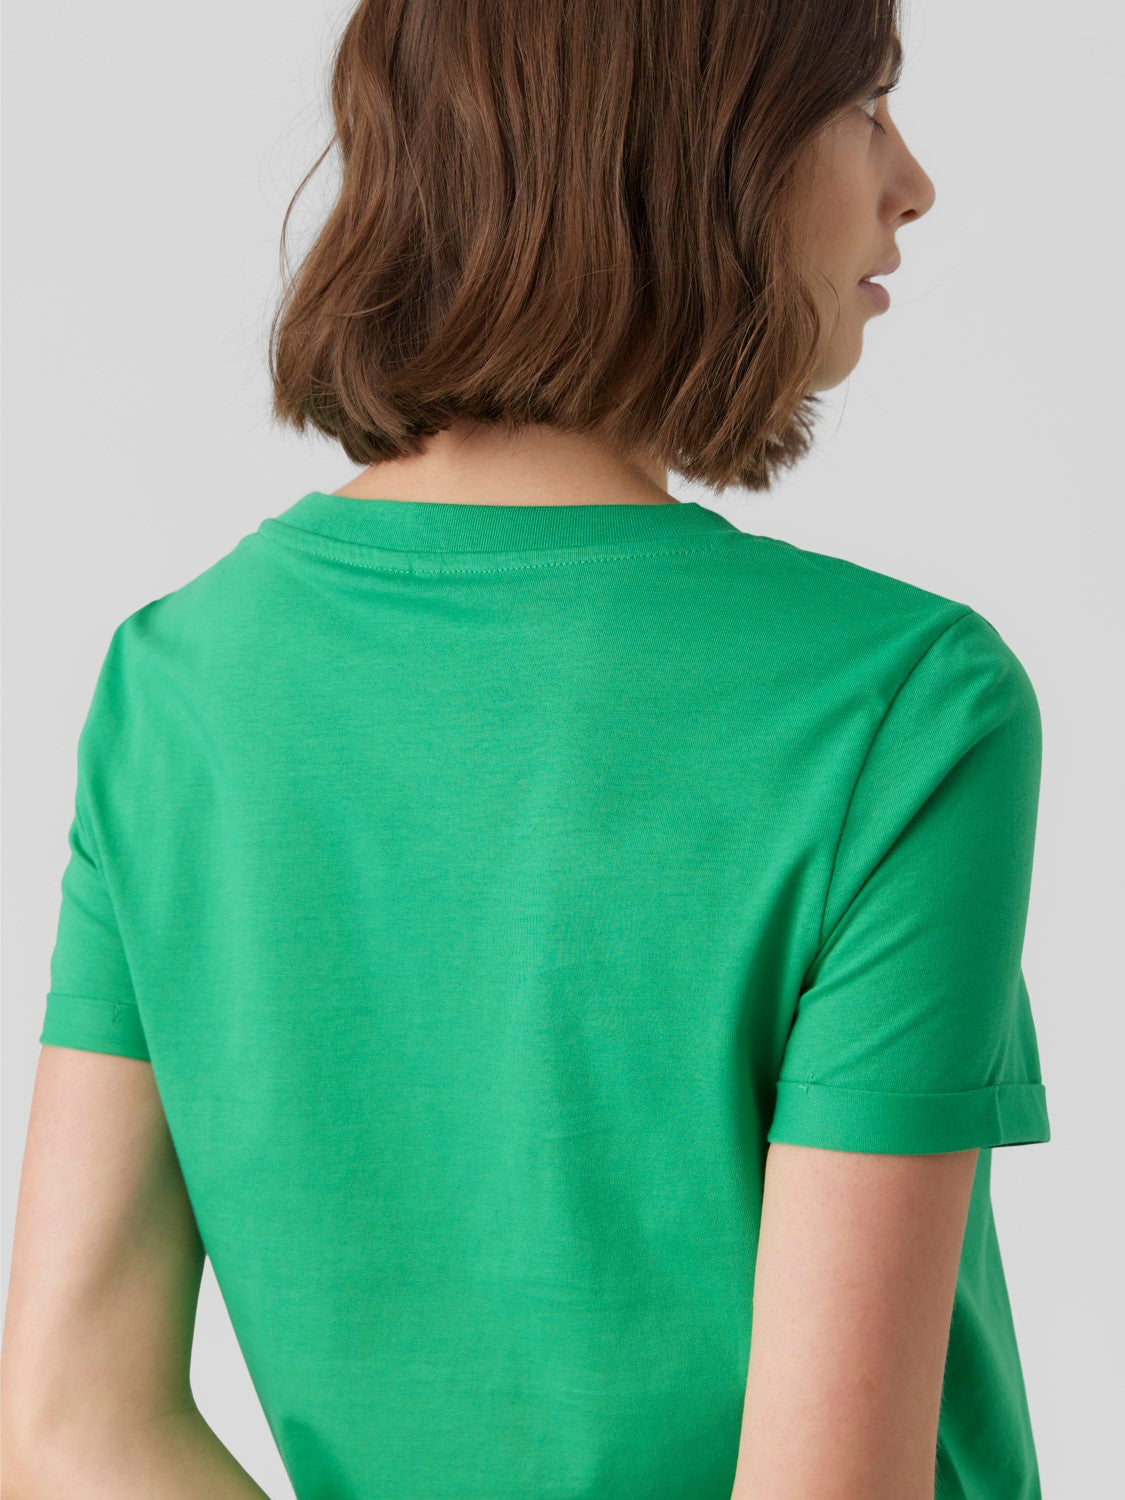 Paula 100% Cotton T-Shirt - Bright Green